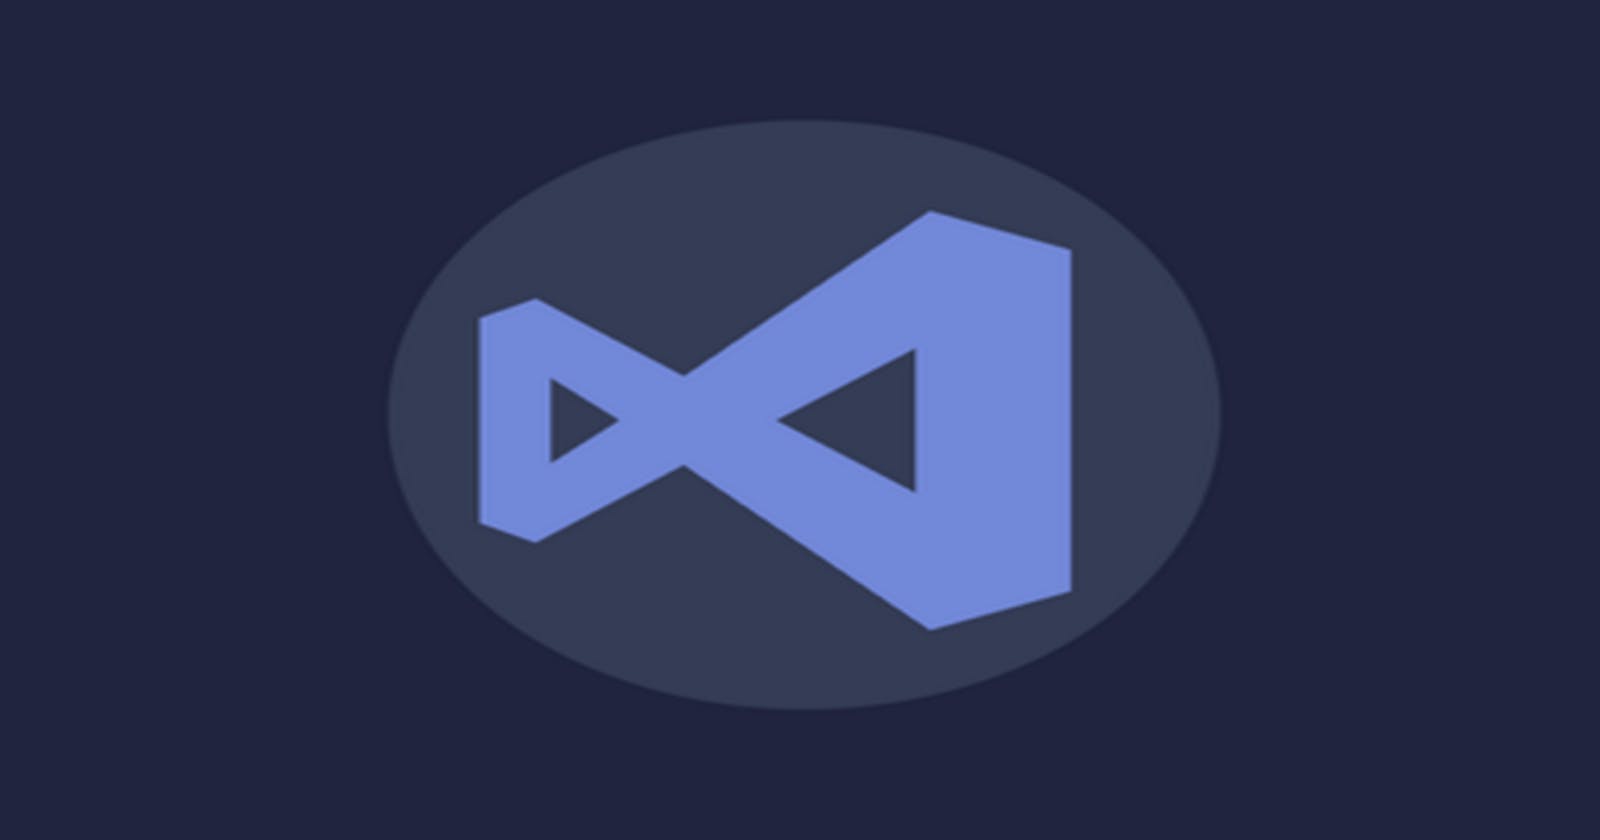 Visual Studio Code Installation